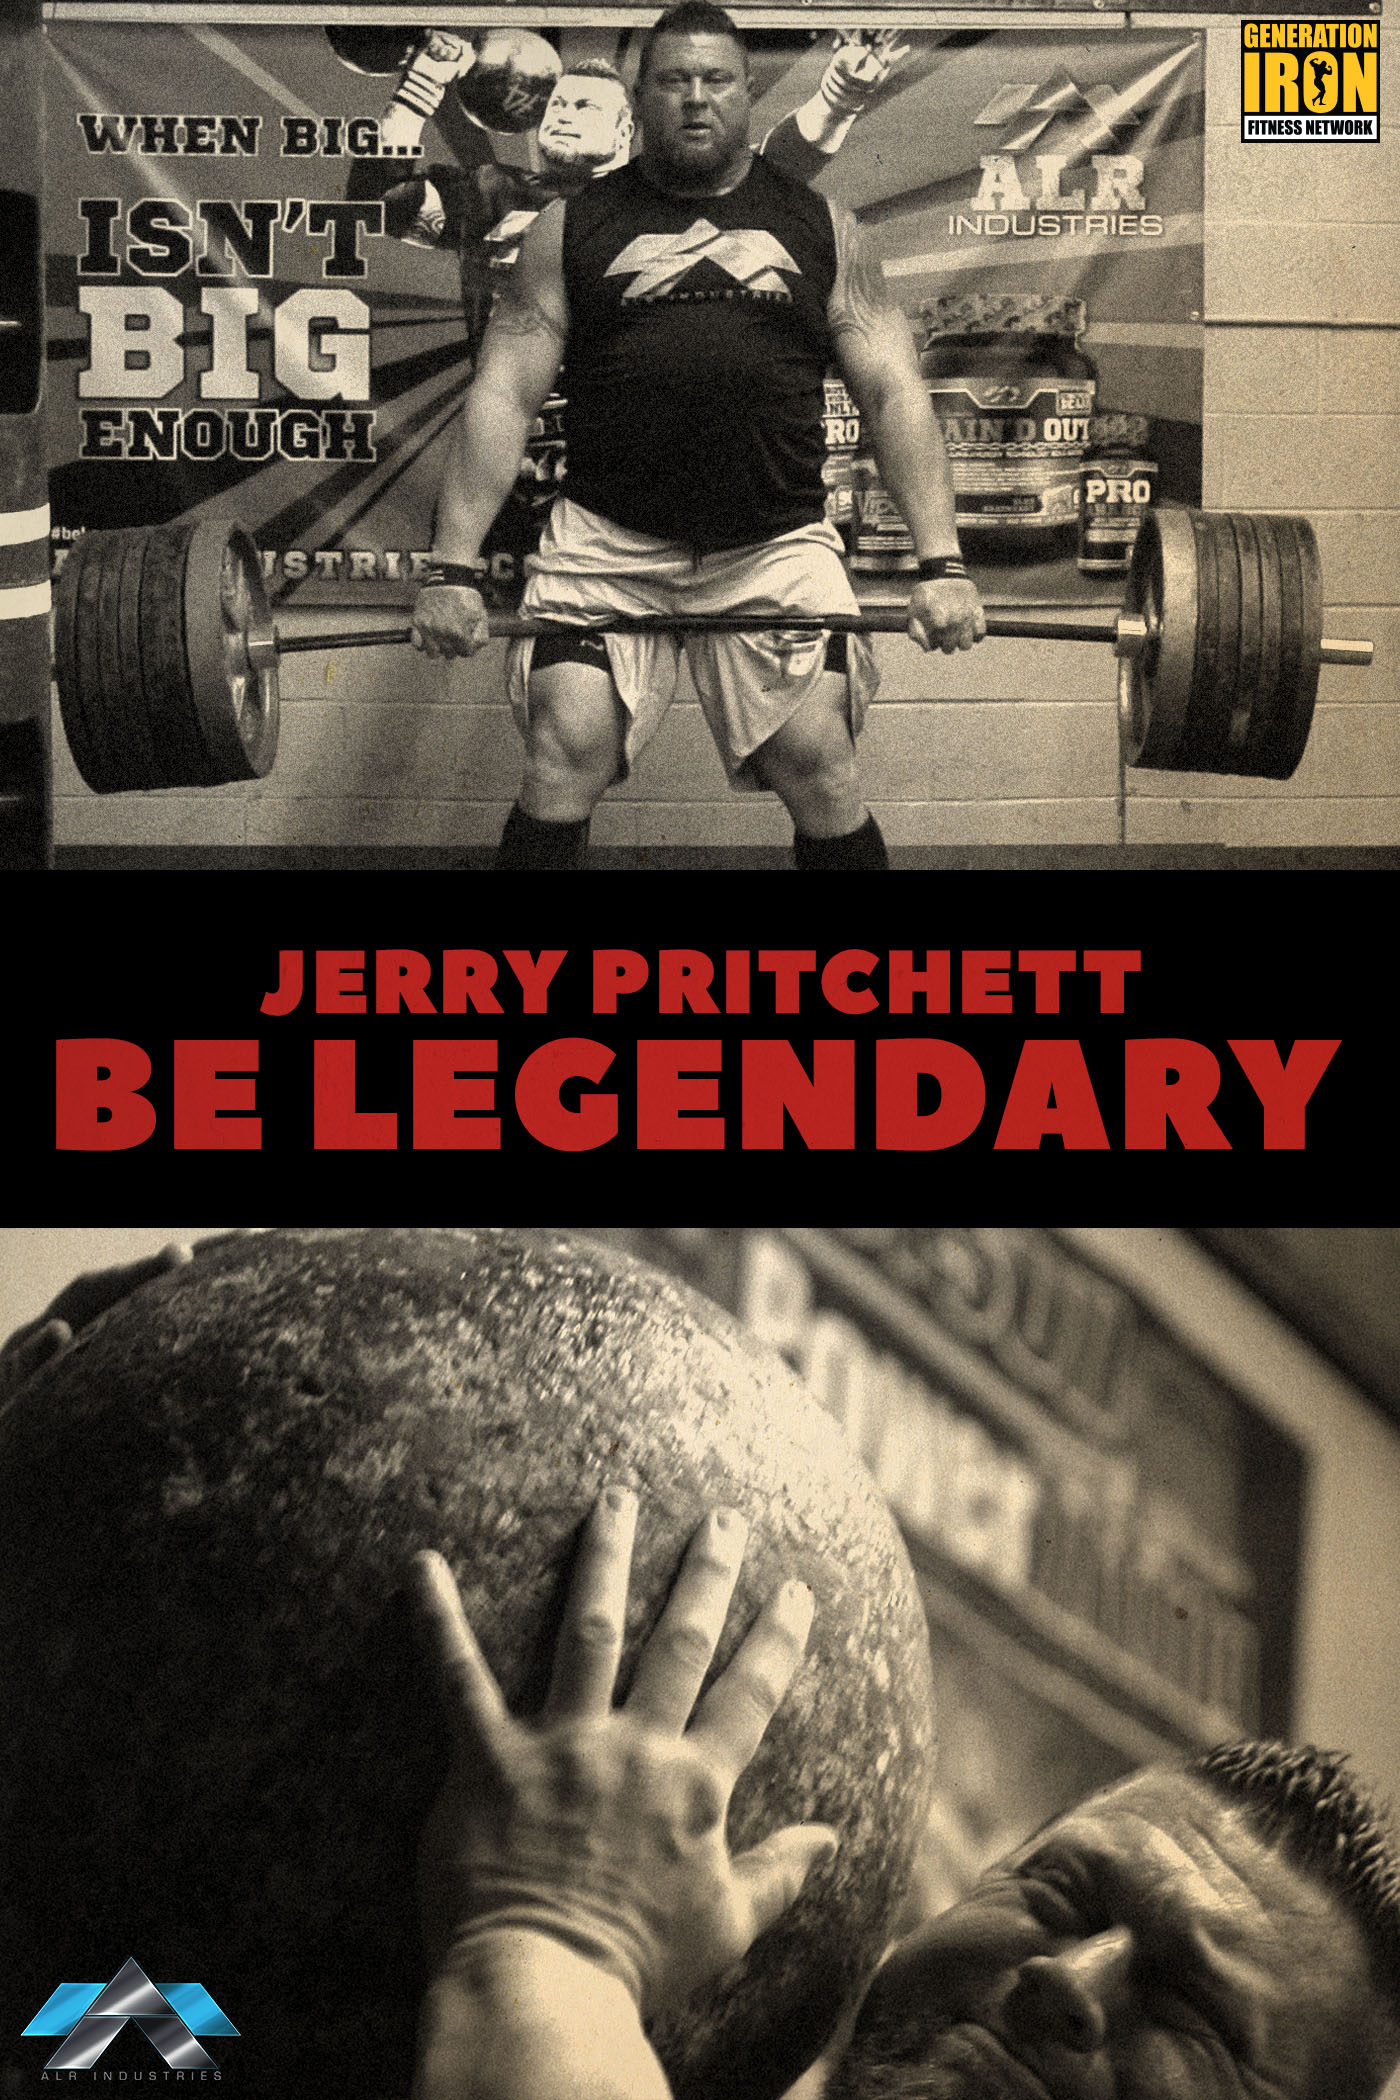 Jerry Pritchett Be Legendary Poster Generation Iron